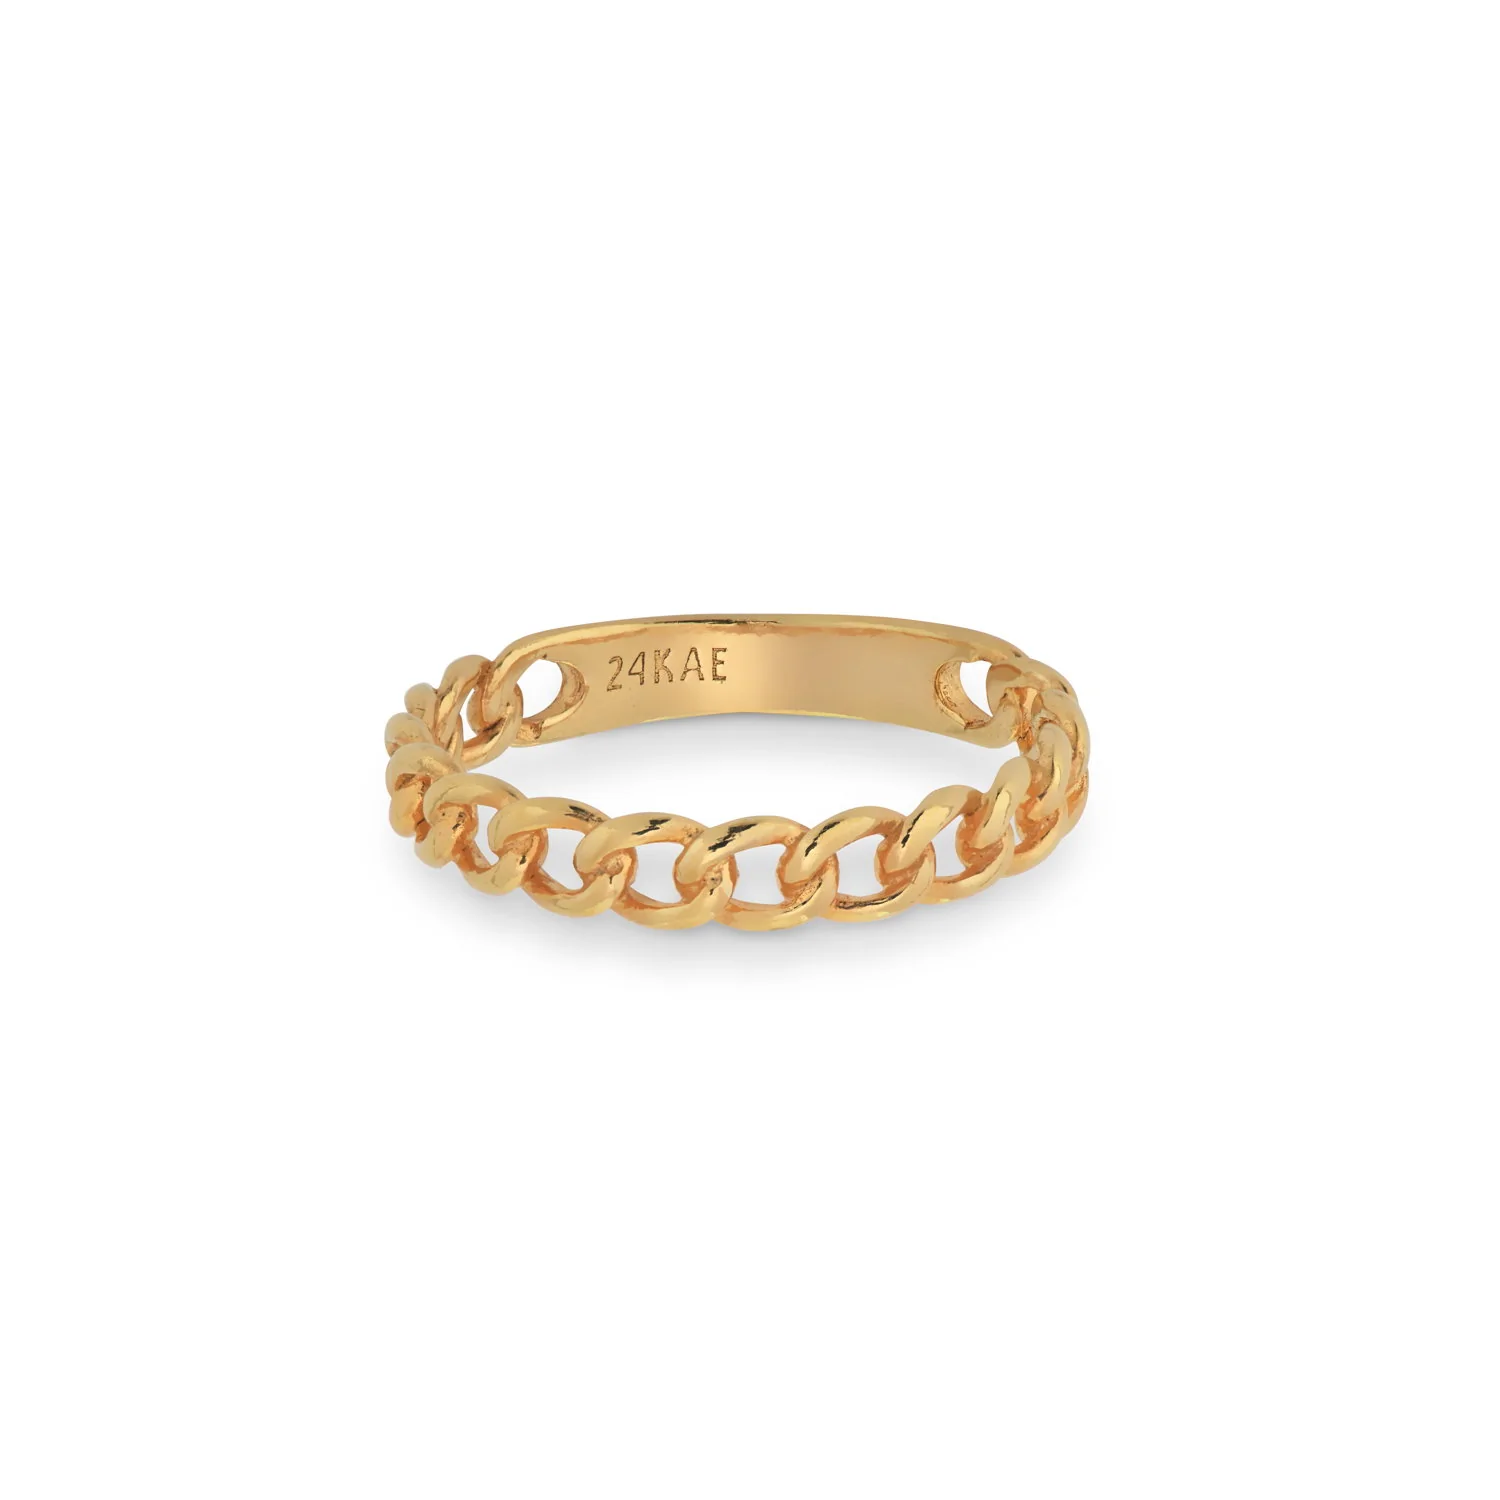 24Kae Gold Chain Link Ring